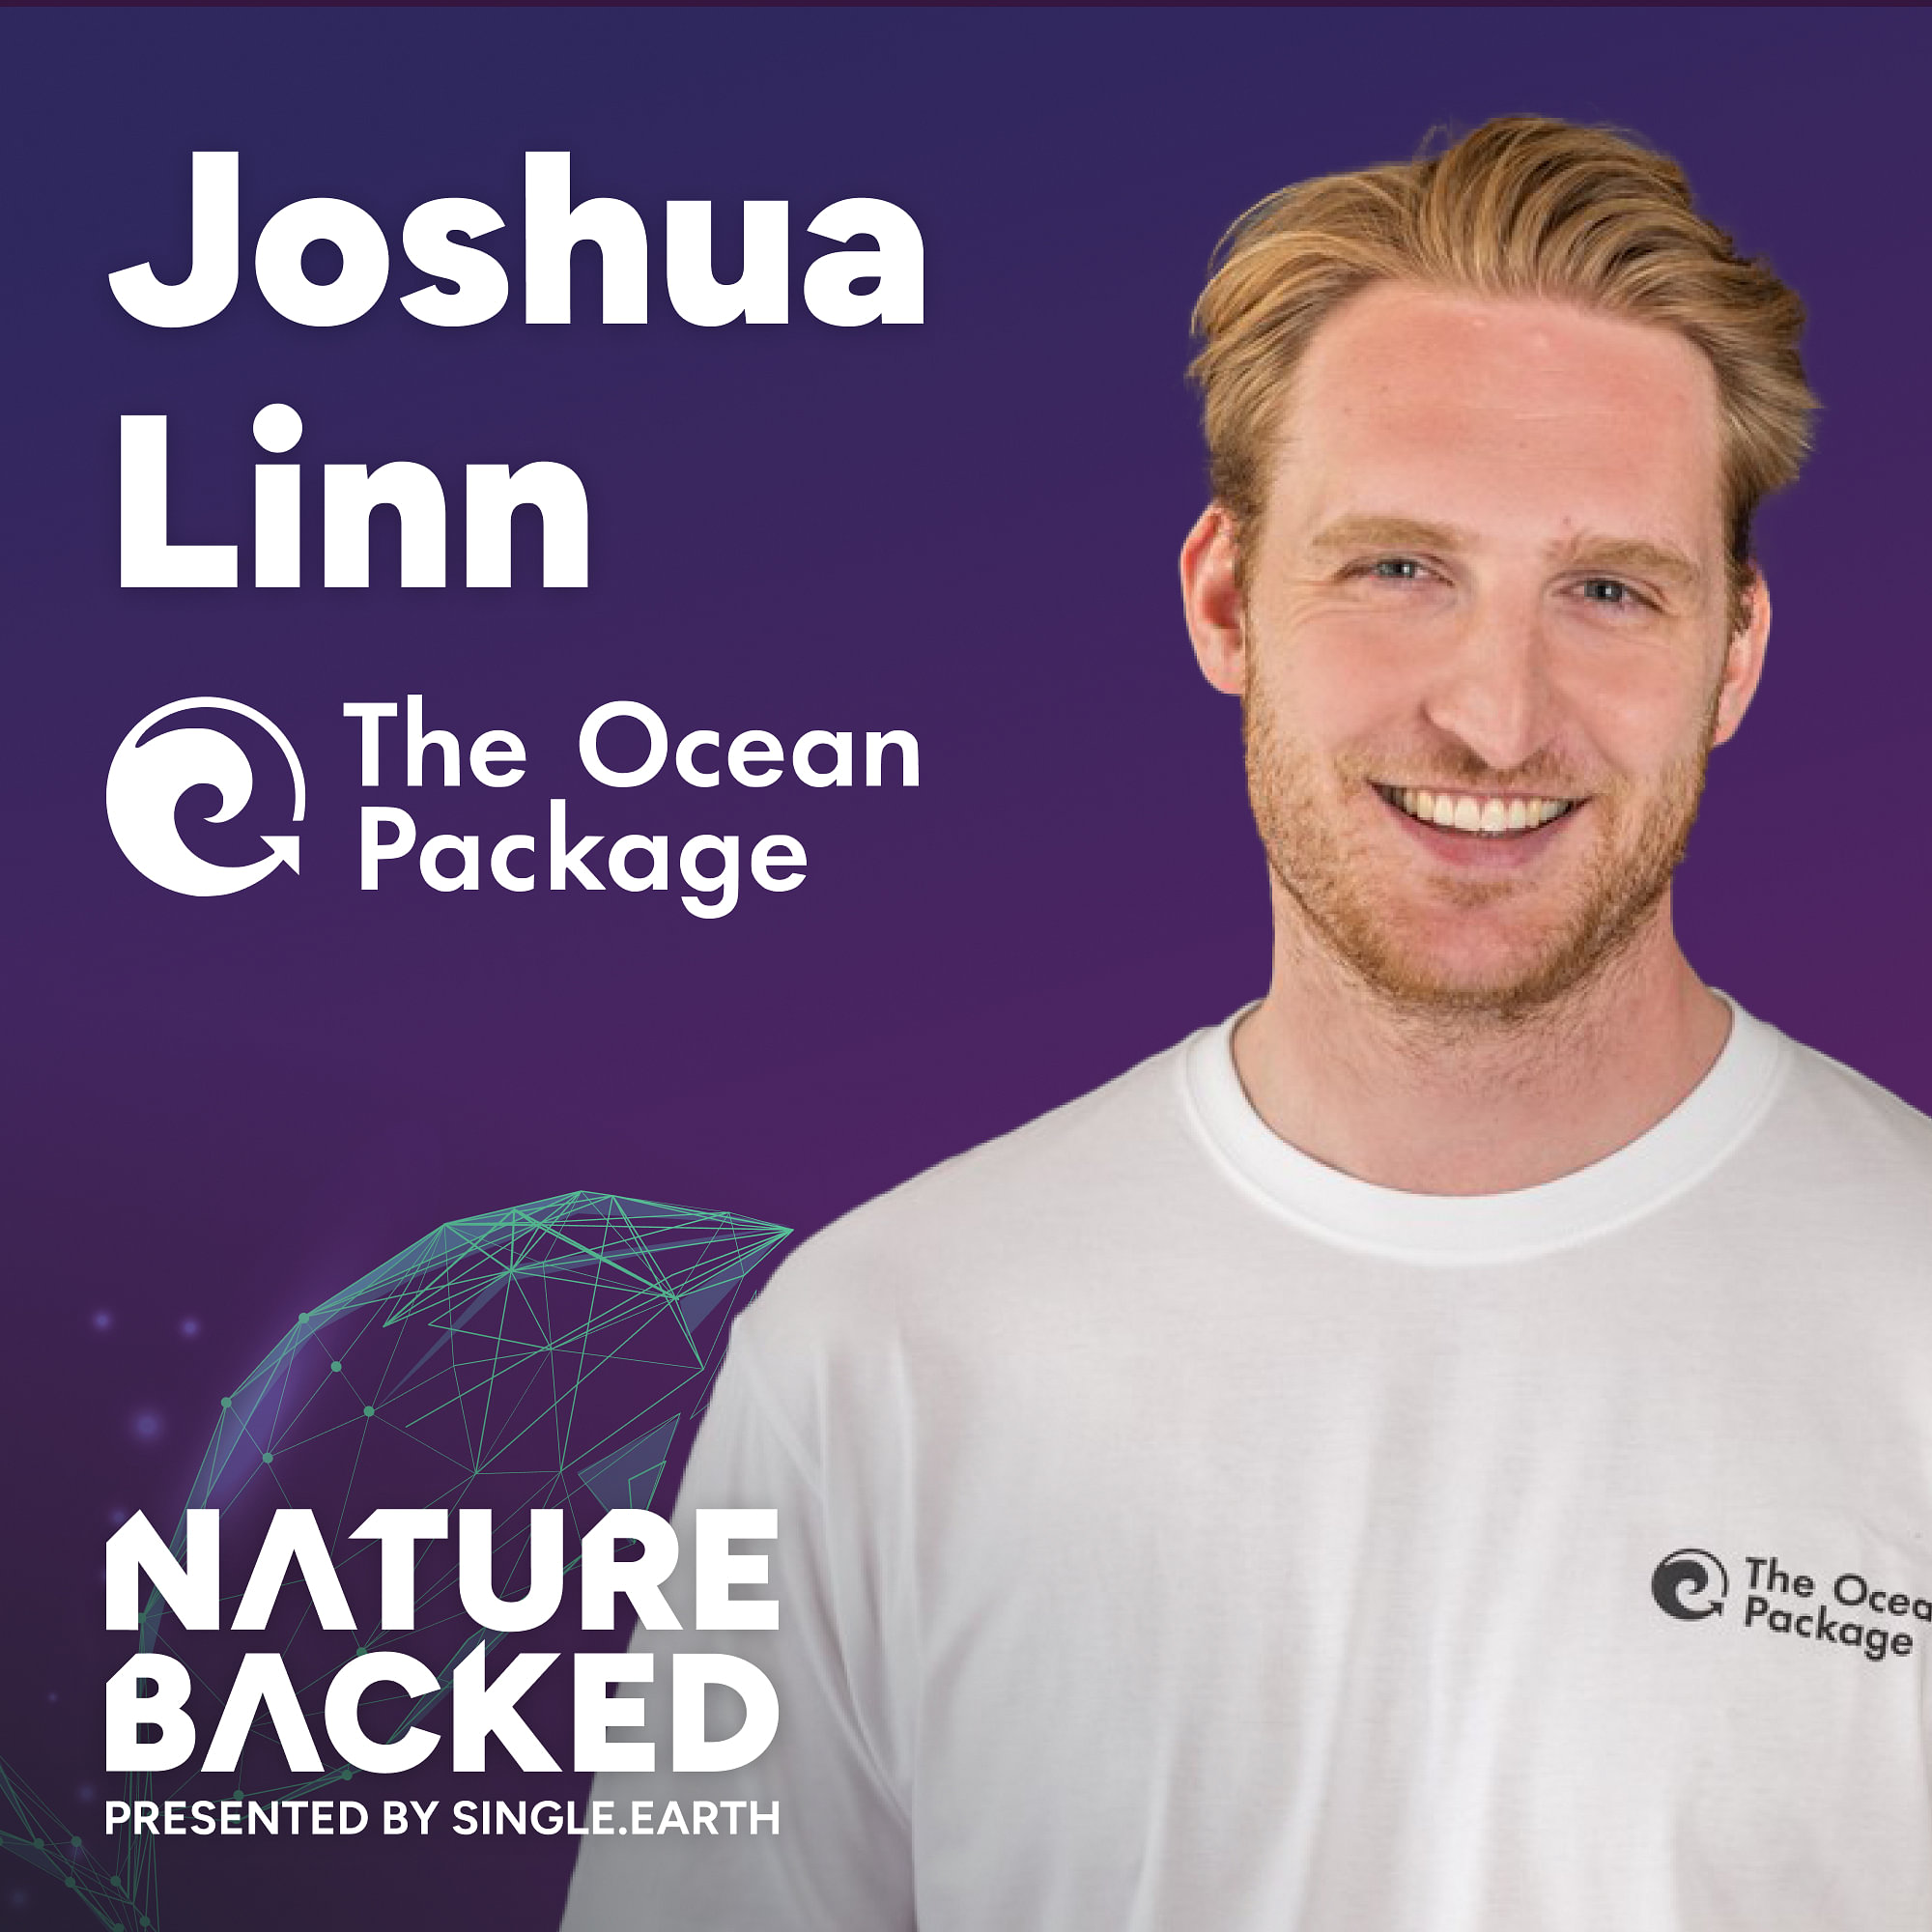 Joshua Linn, The Ocean Package